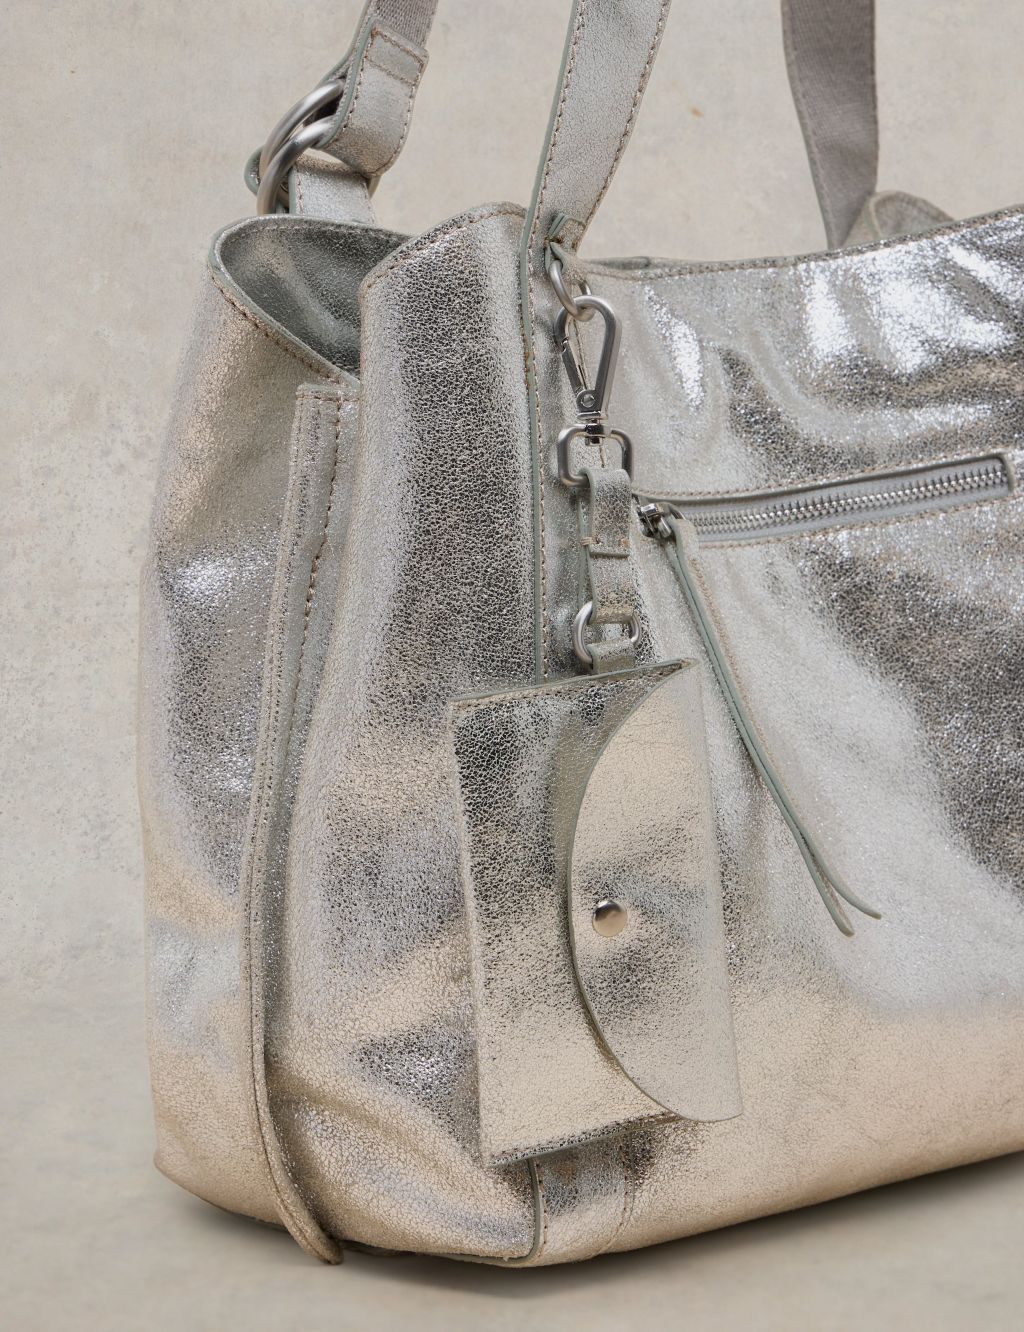 Leather Metallic Tote Bag 2 of 4